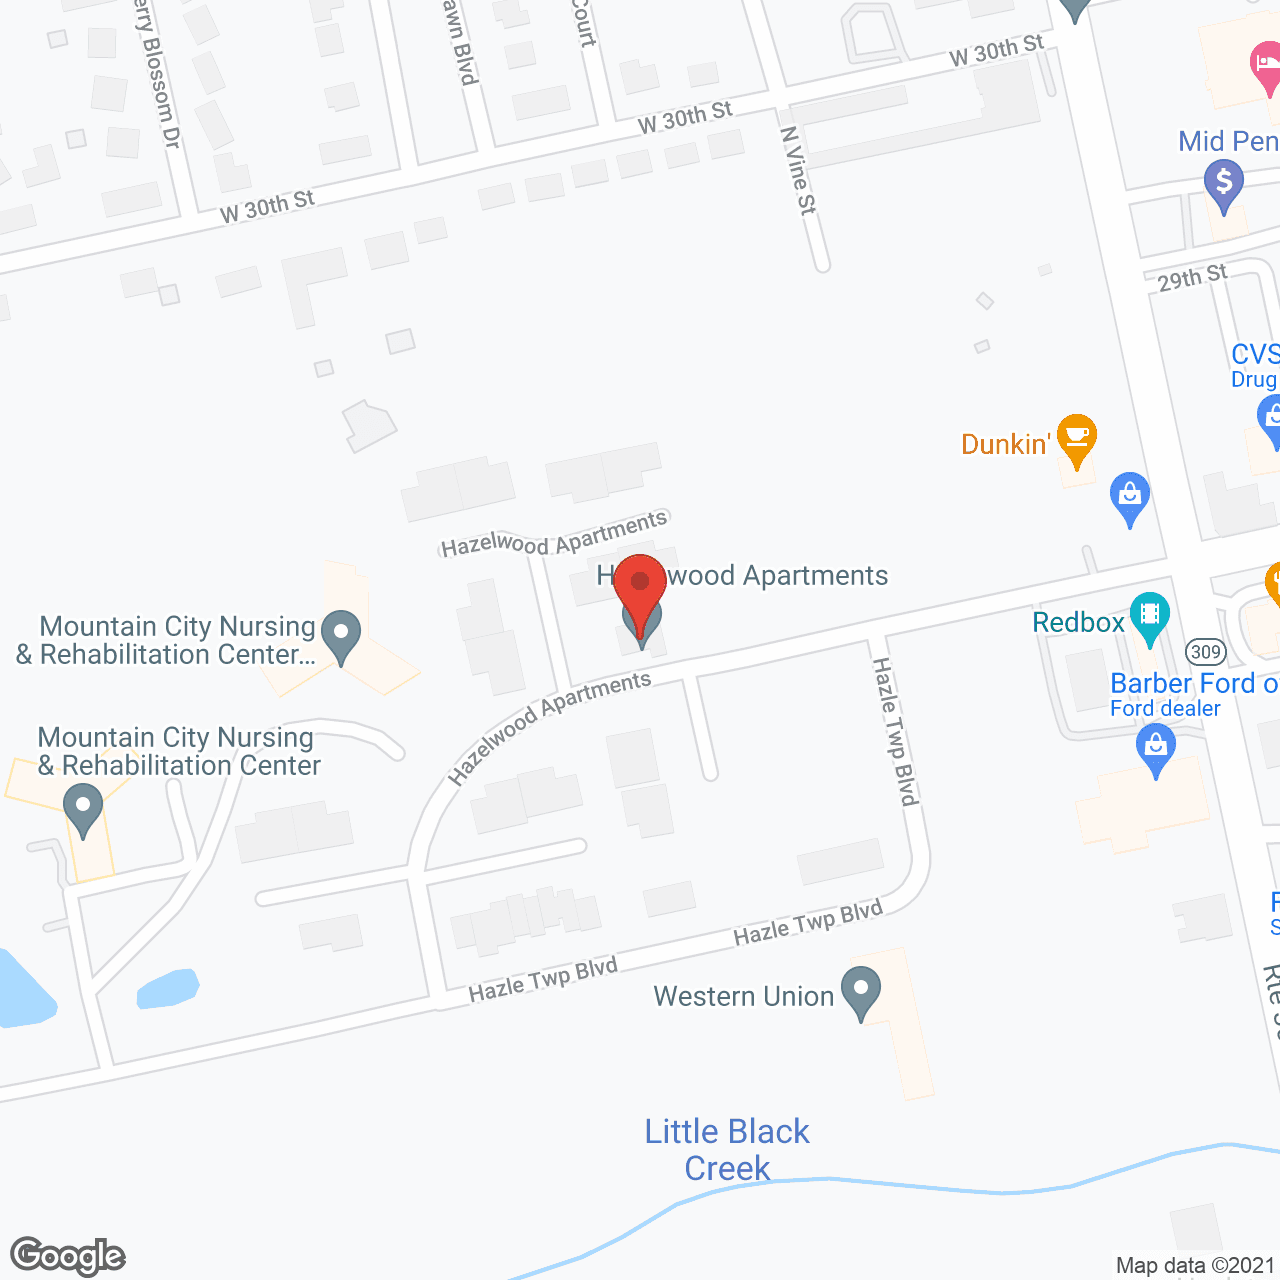 Hazlewood Apartments in google map